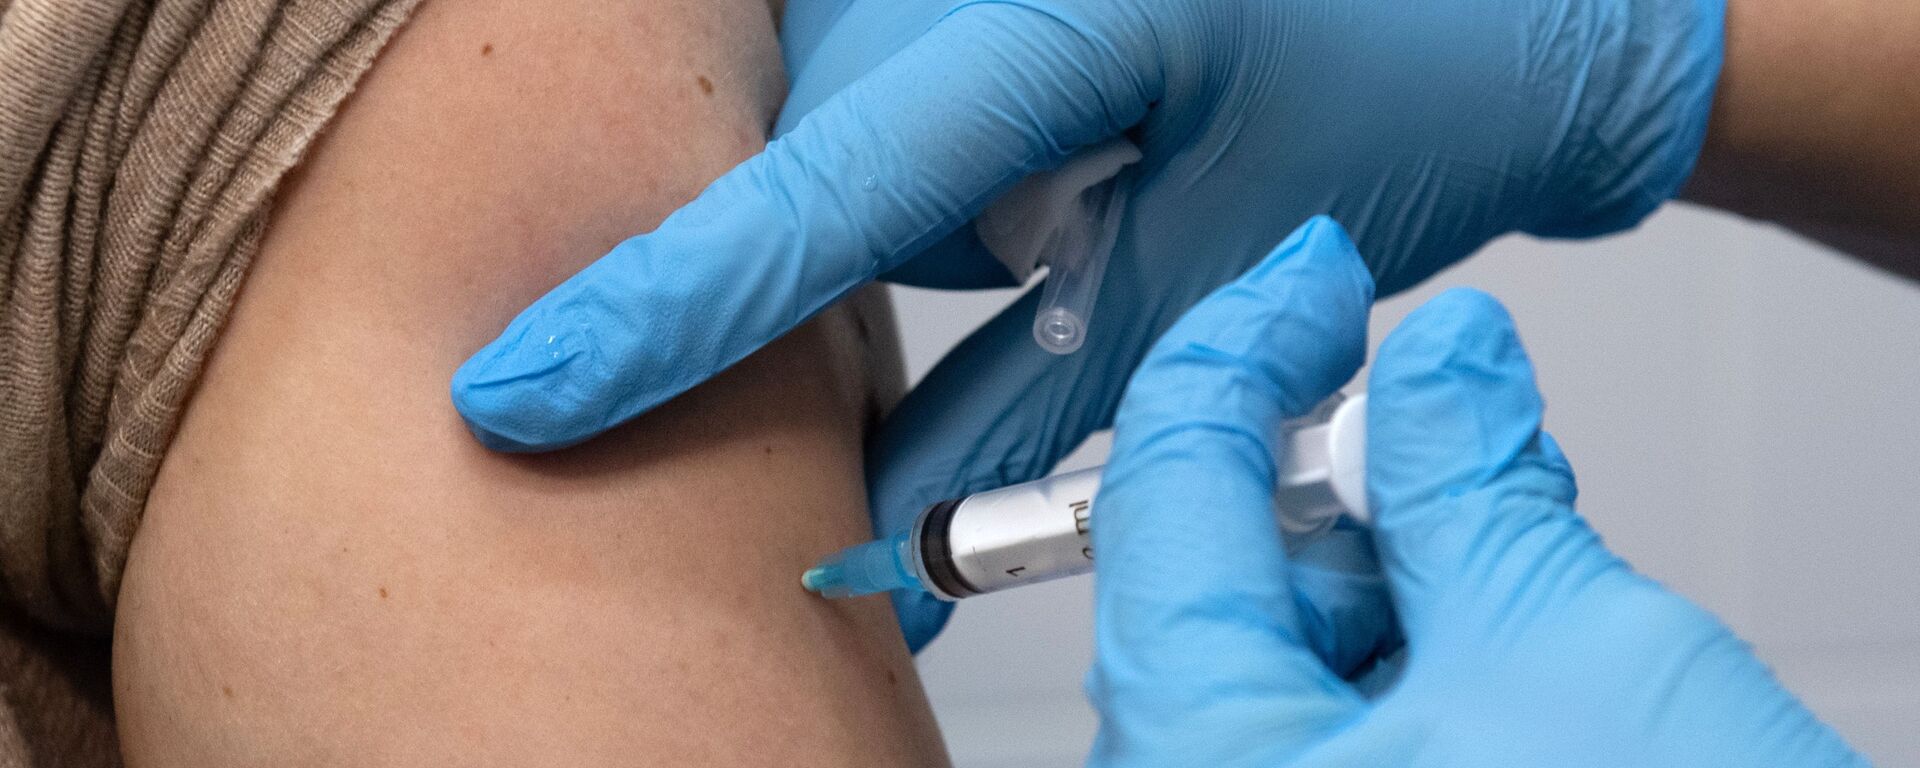 تطعيم أهالي موسكو بلقاح ضد فيروس كورونا (كوفيد - 19)، روسيا 5 ديسمبر 2020 - سبوتنيك عربي, 1920, 09.02.2021